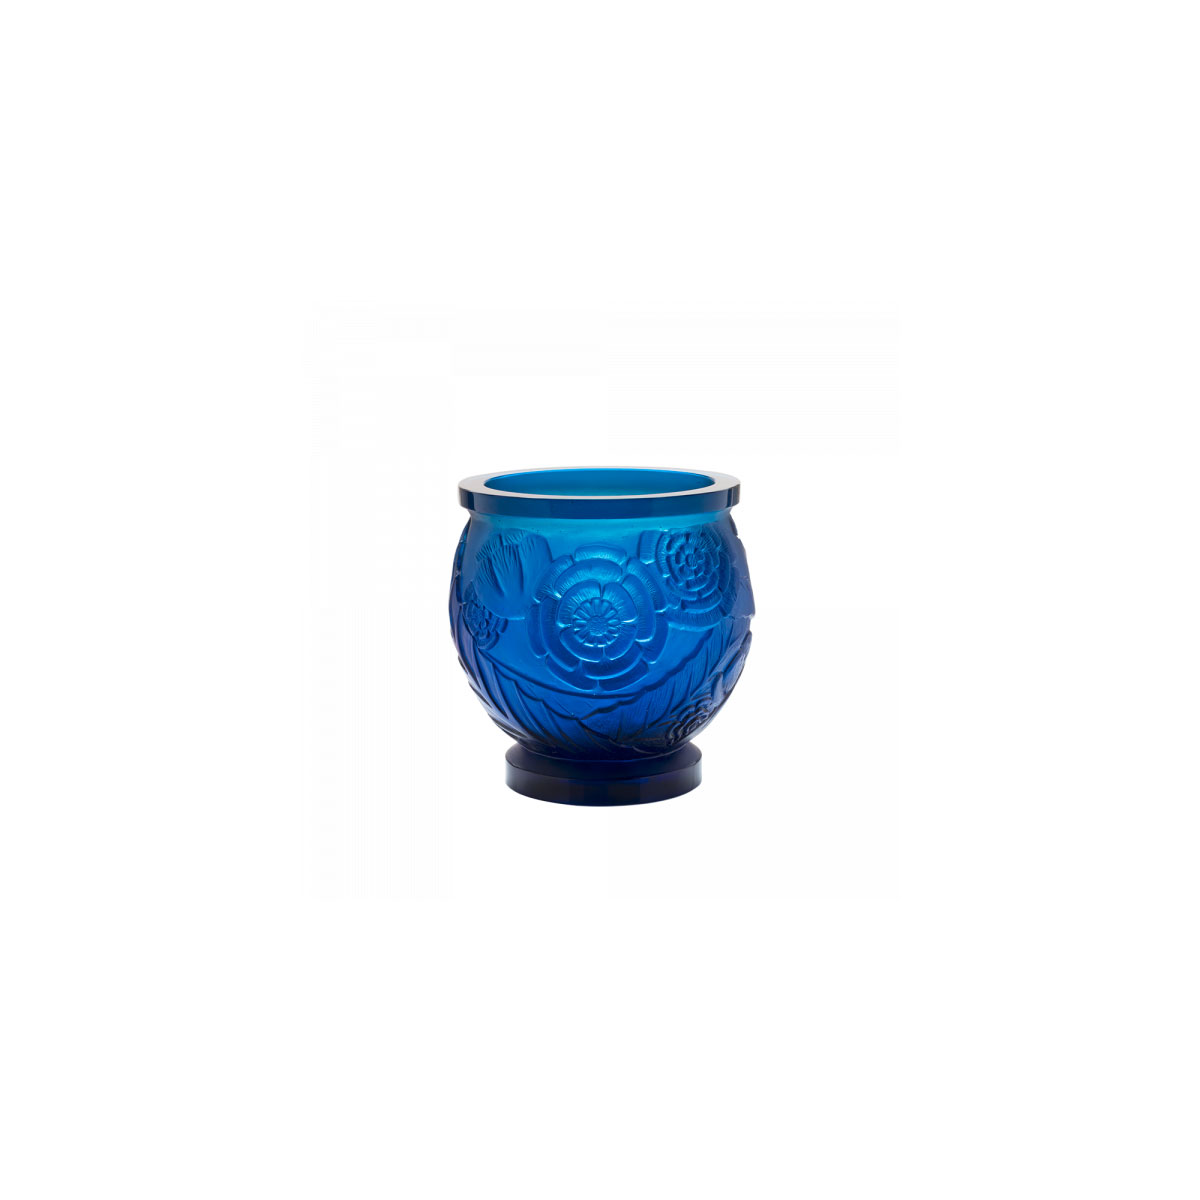 Daum Medium Empreinte Vase in Blue, Limited Edition